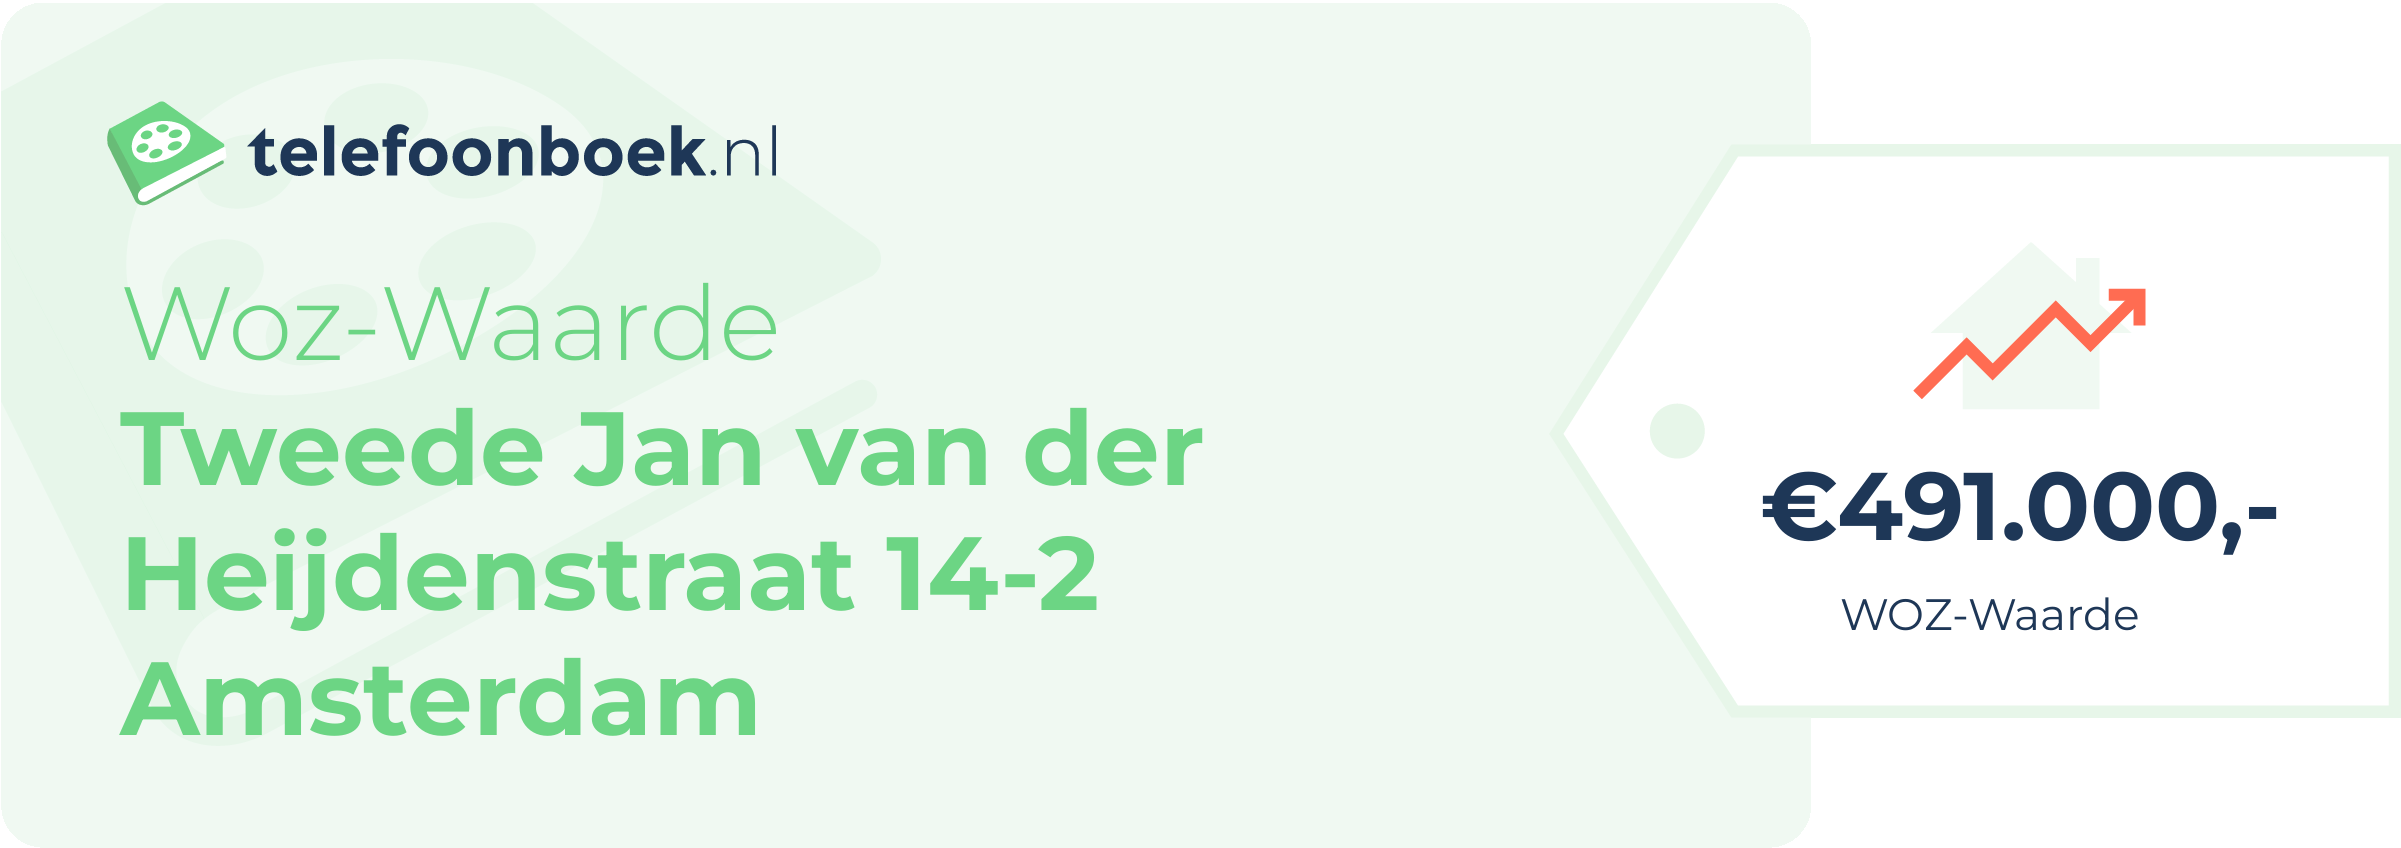 WOZ-waarde Tweede Jan Van Der Heijdenstraat 14-2 Amsterdam